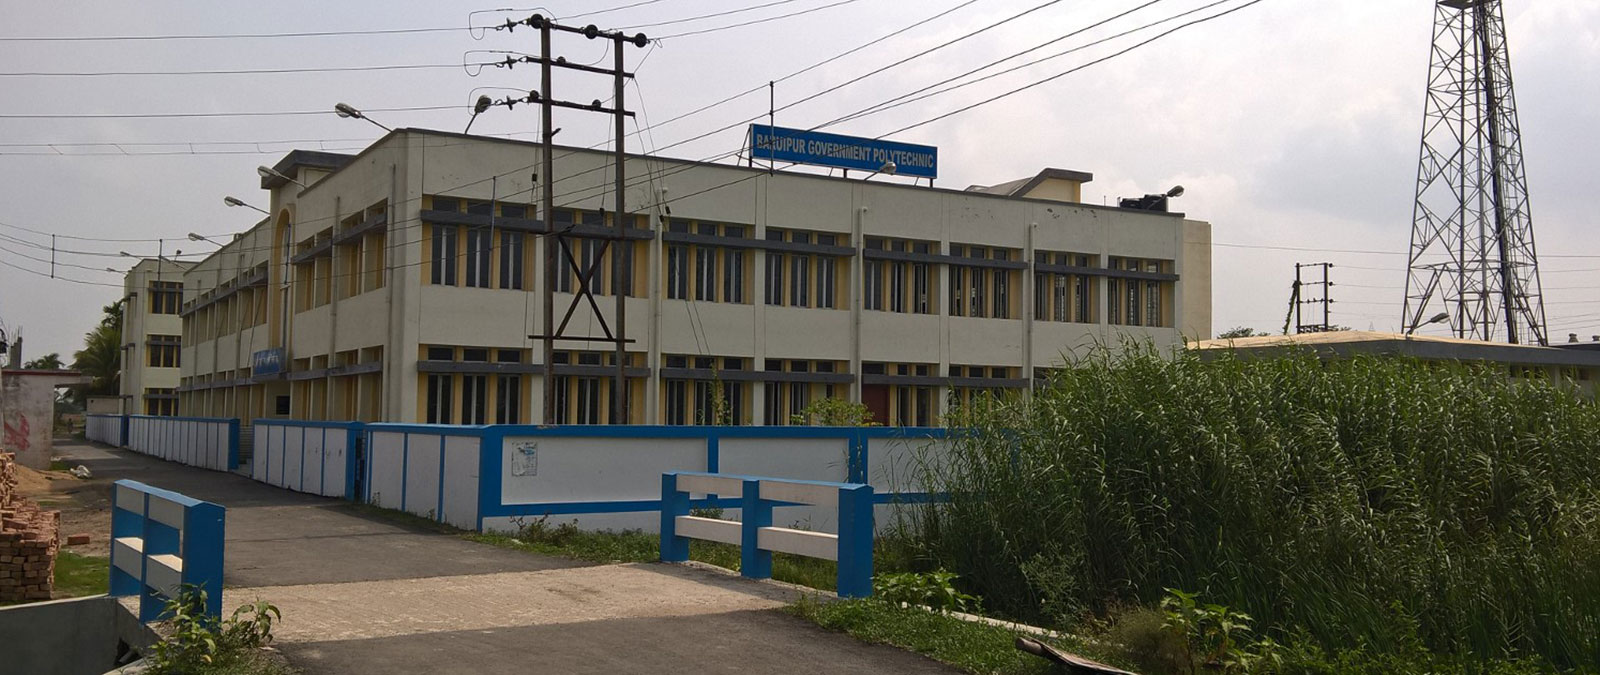 Baruipur Government Polytechnic Image